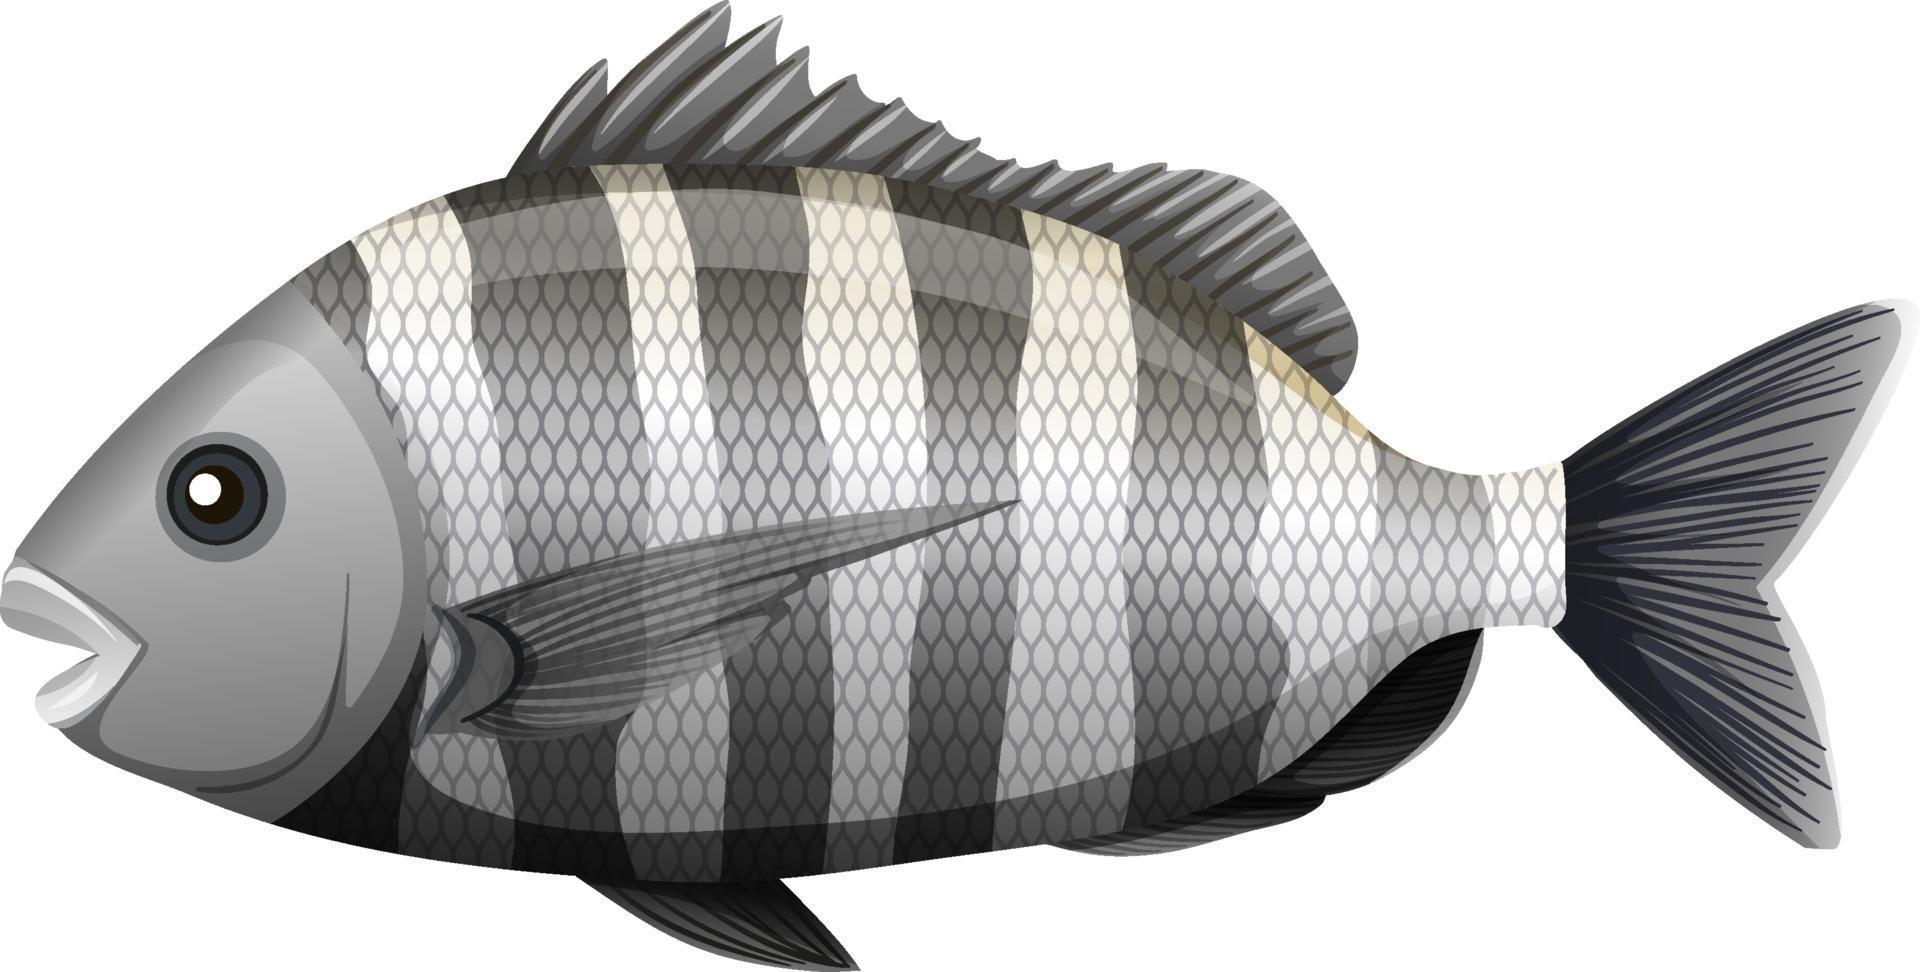 fårhuvudfisk i tecknad stil på vit bakgrund vektor